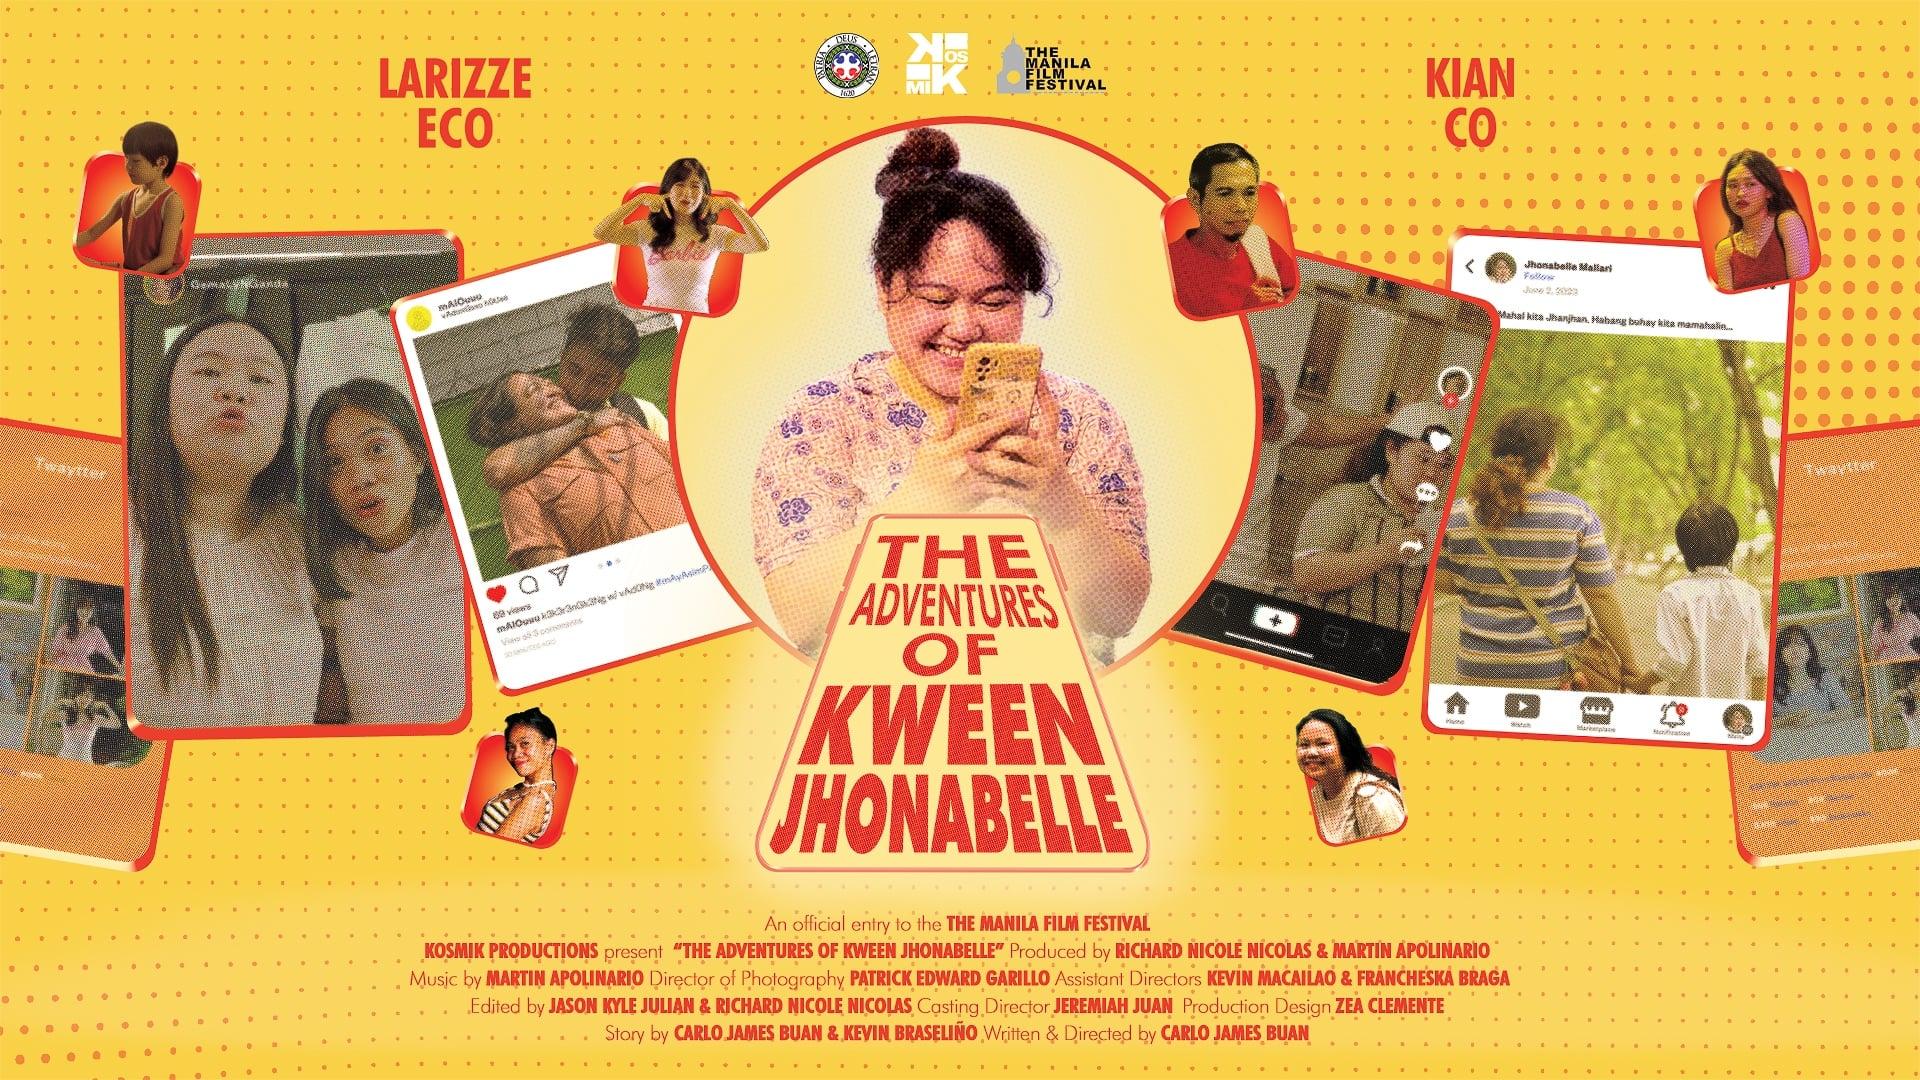 The Adventures of Kween Jhonabelle backdrop